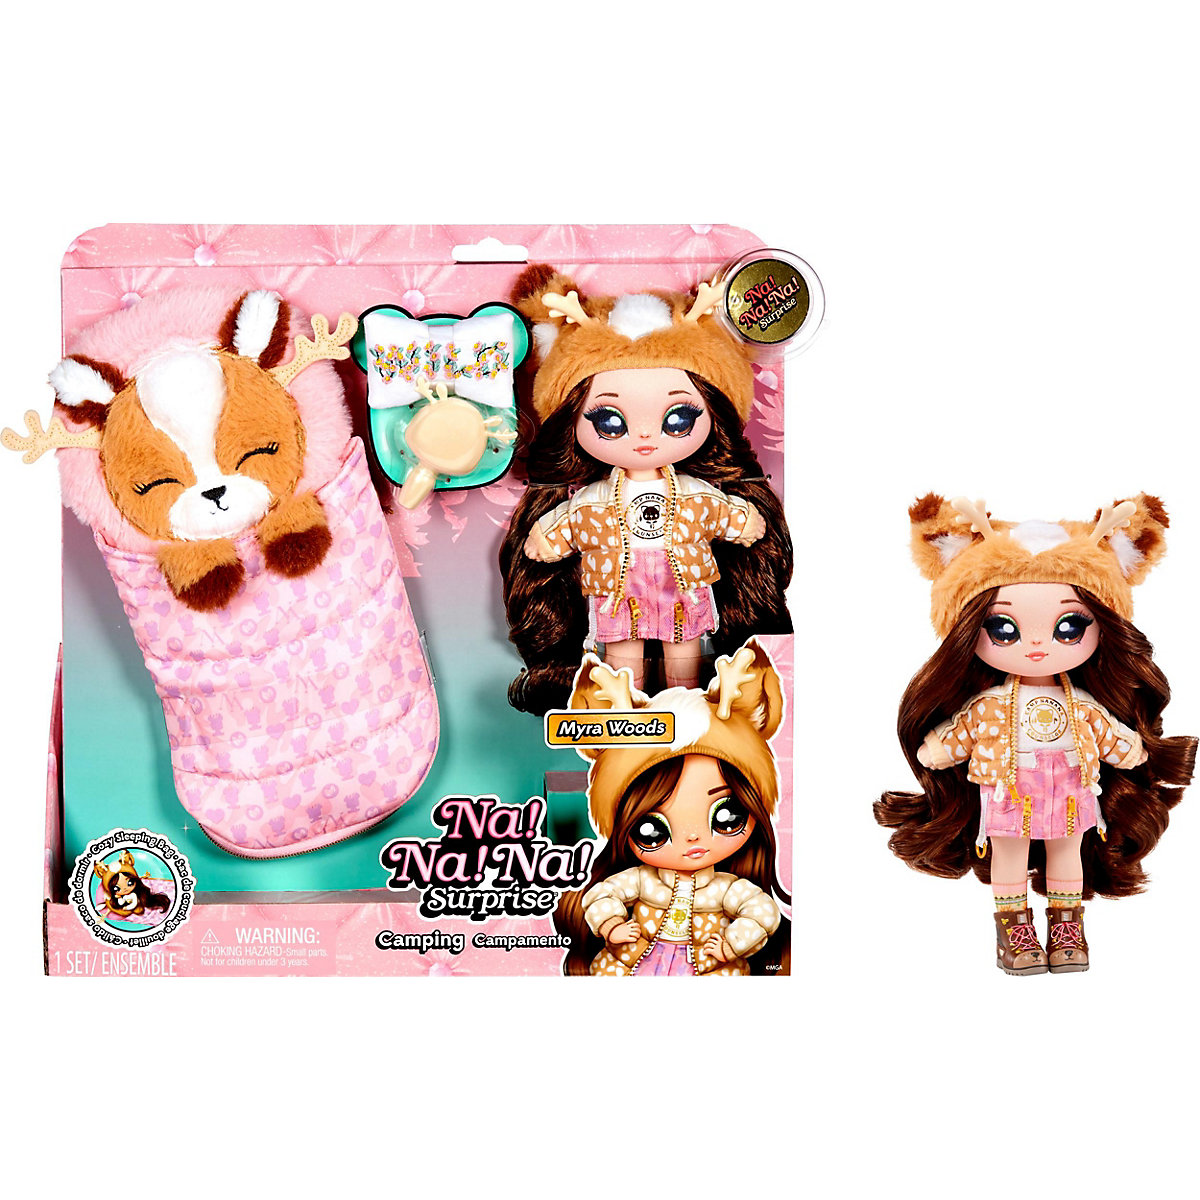 Na! Na! Na! Surprise Camping Doll - Myra Woods (Deer)